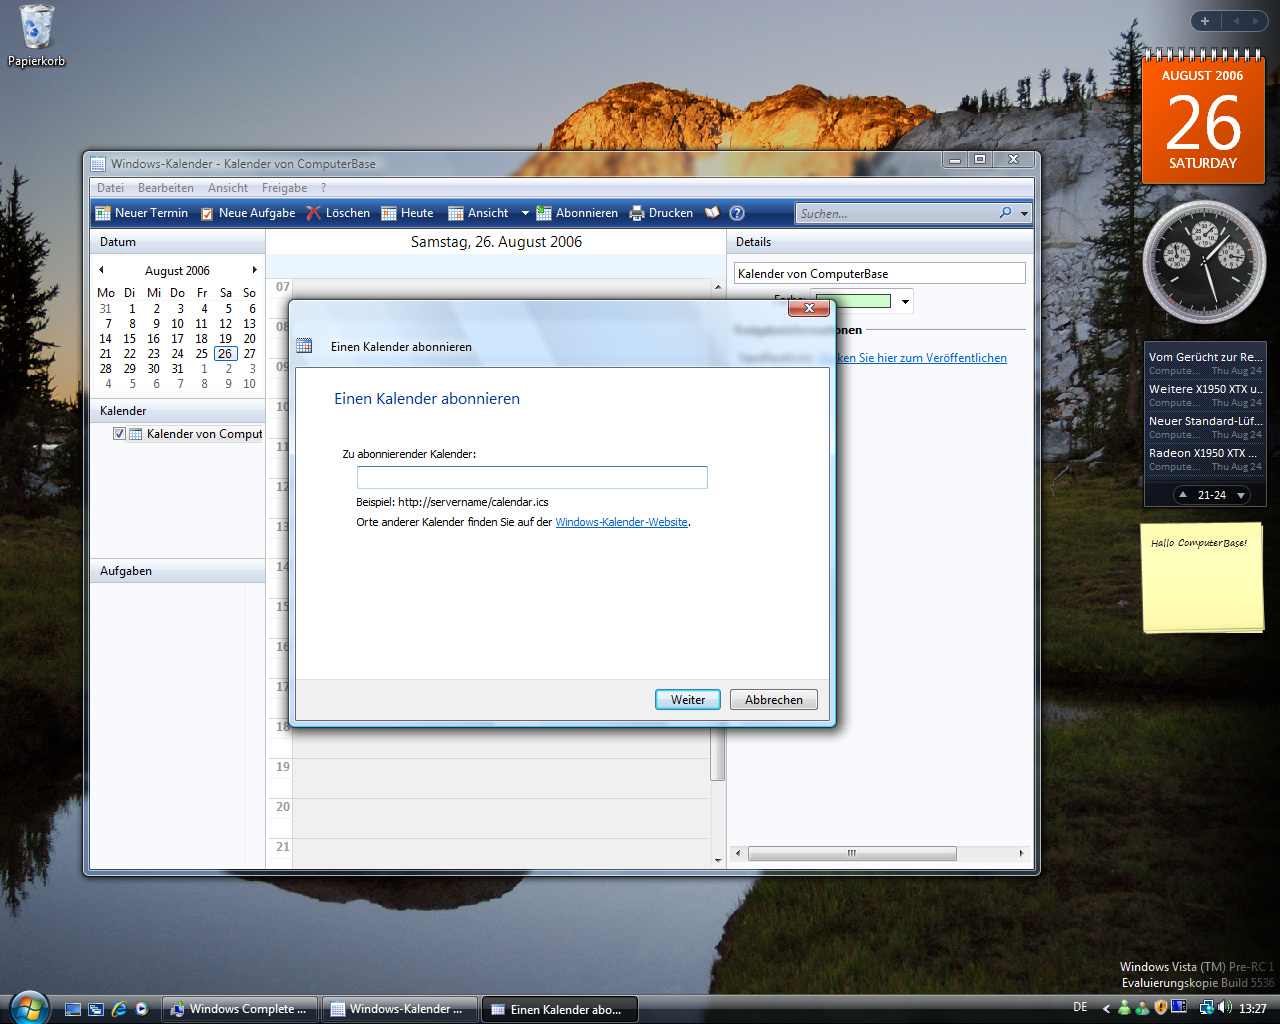 Windows Vista Build 5536 - Kalender